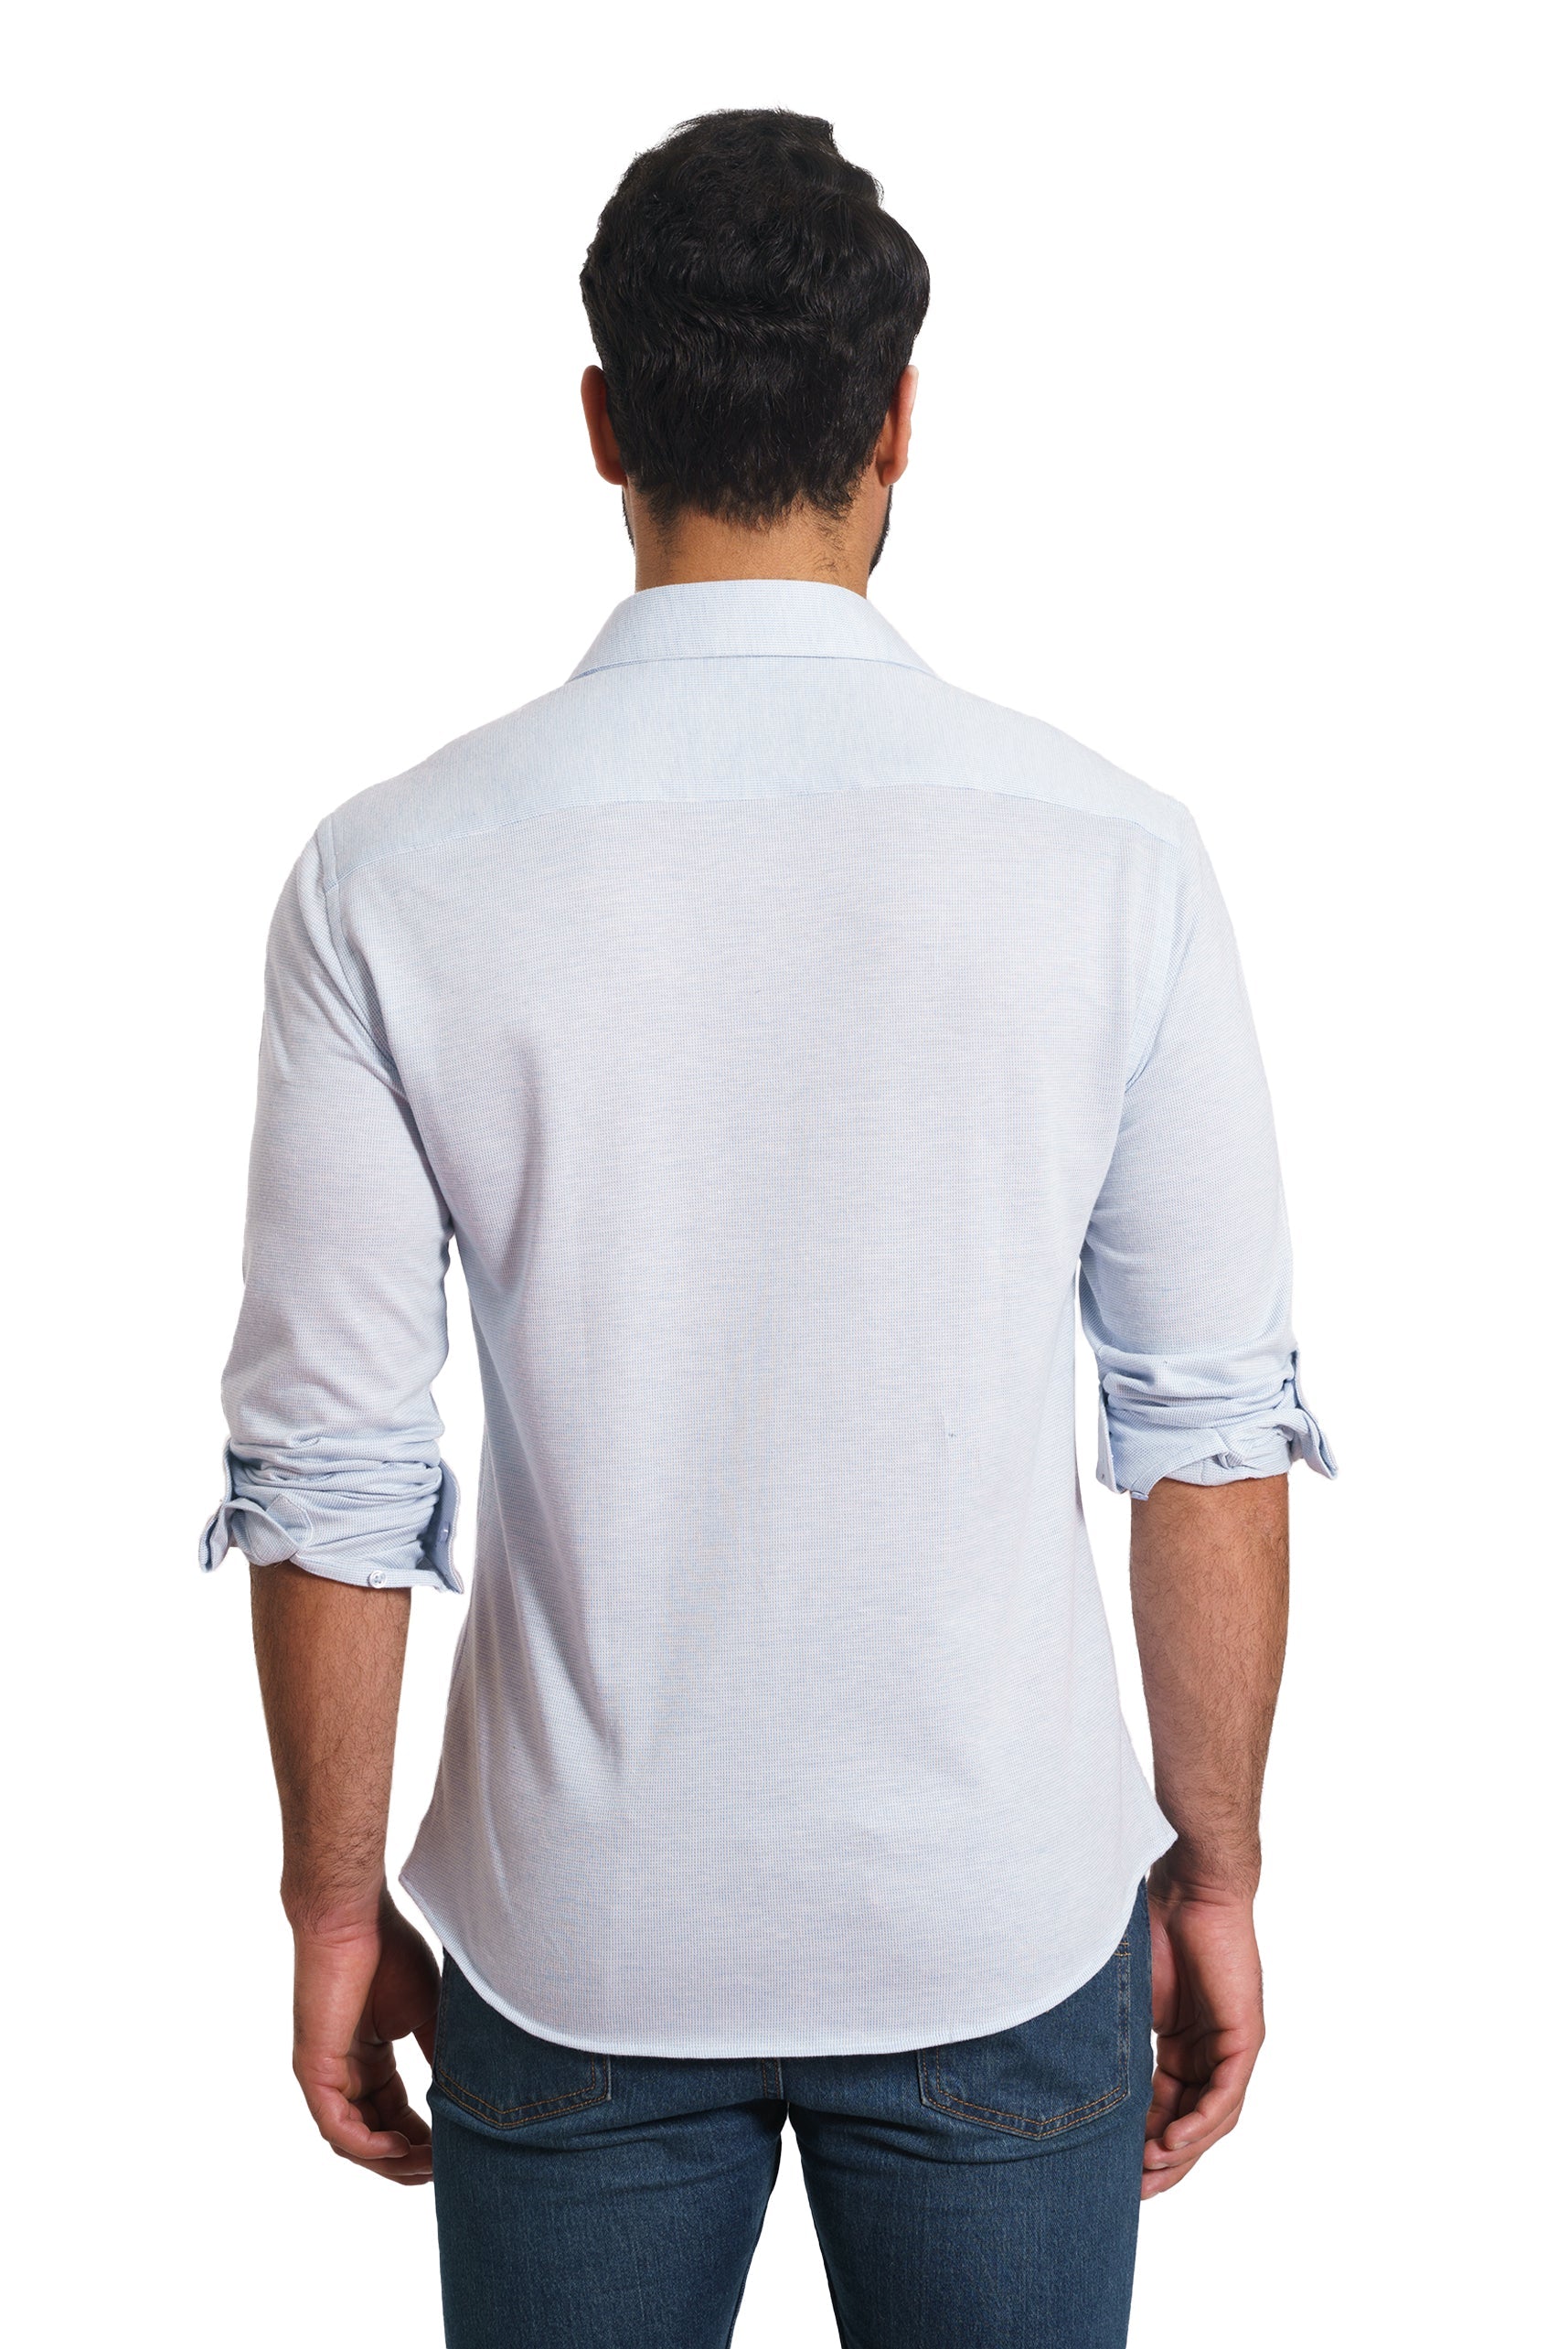 Blue Long Sleeve Shirt TH-2884 Back